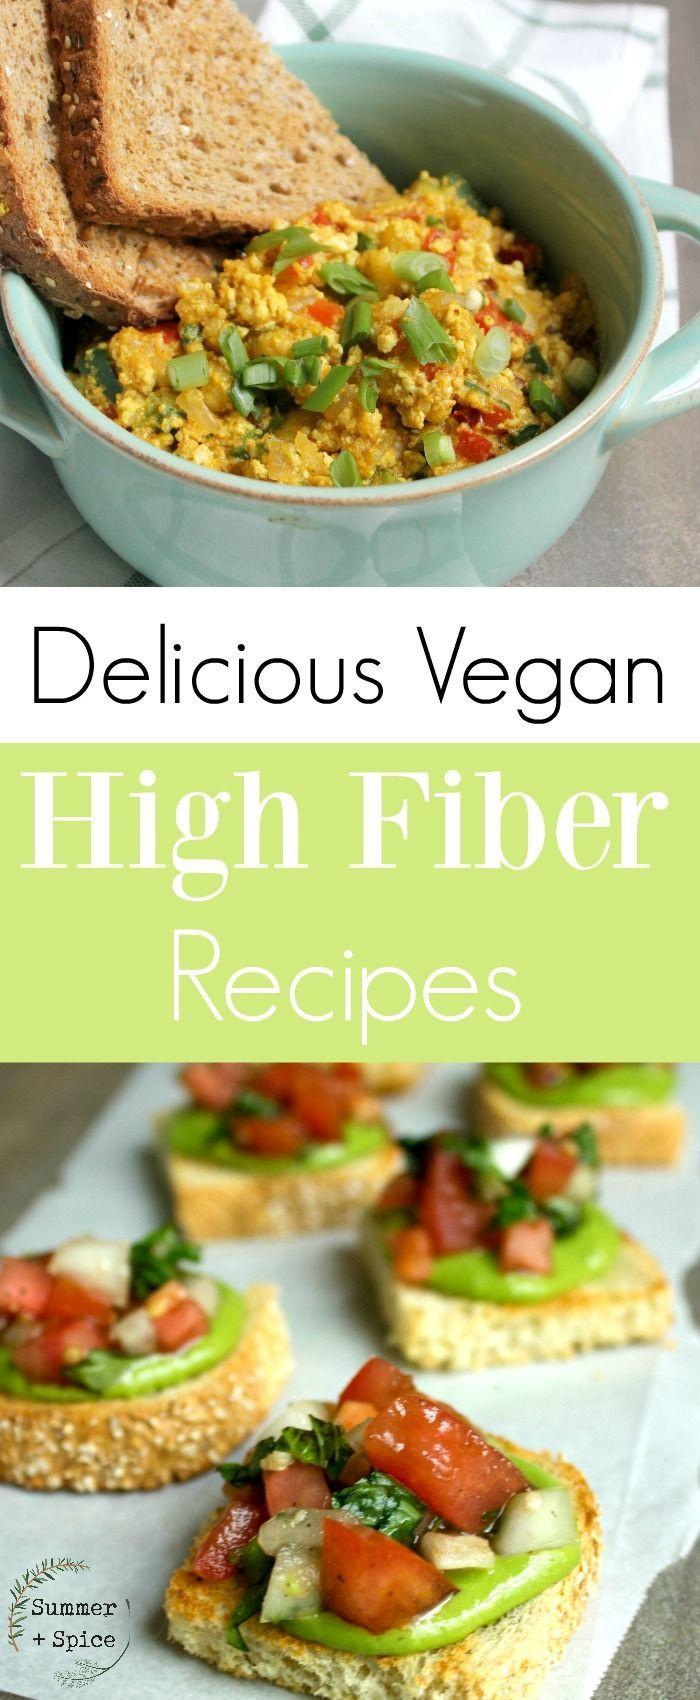 High Fiber Vegetarian Recipes
 Delicious High Fiber Recipes You Have to Try